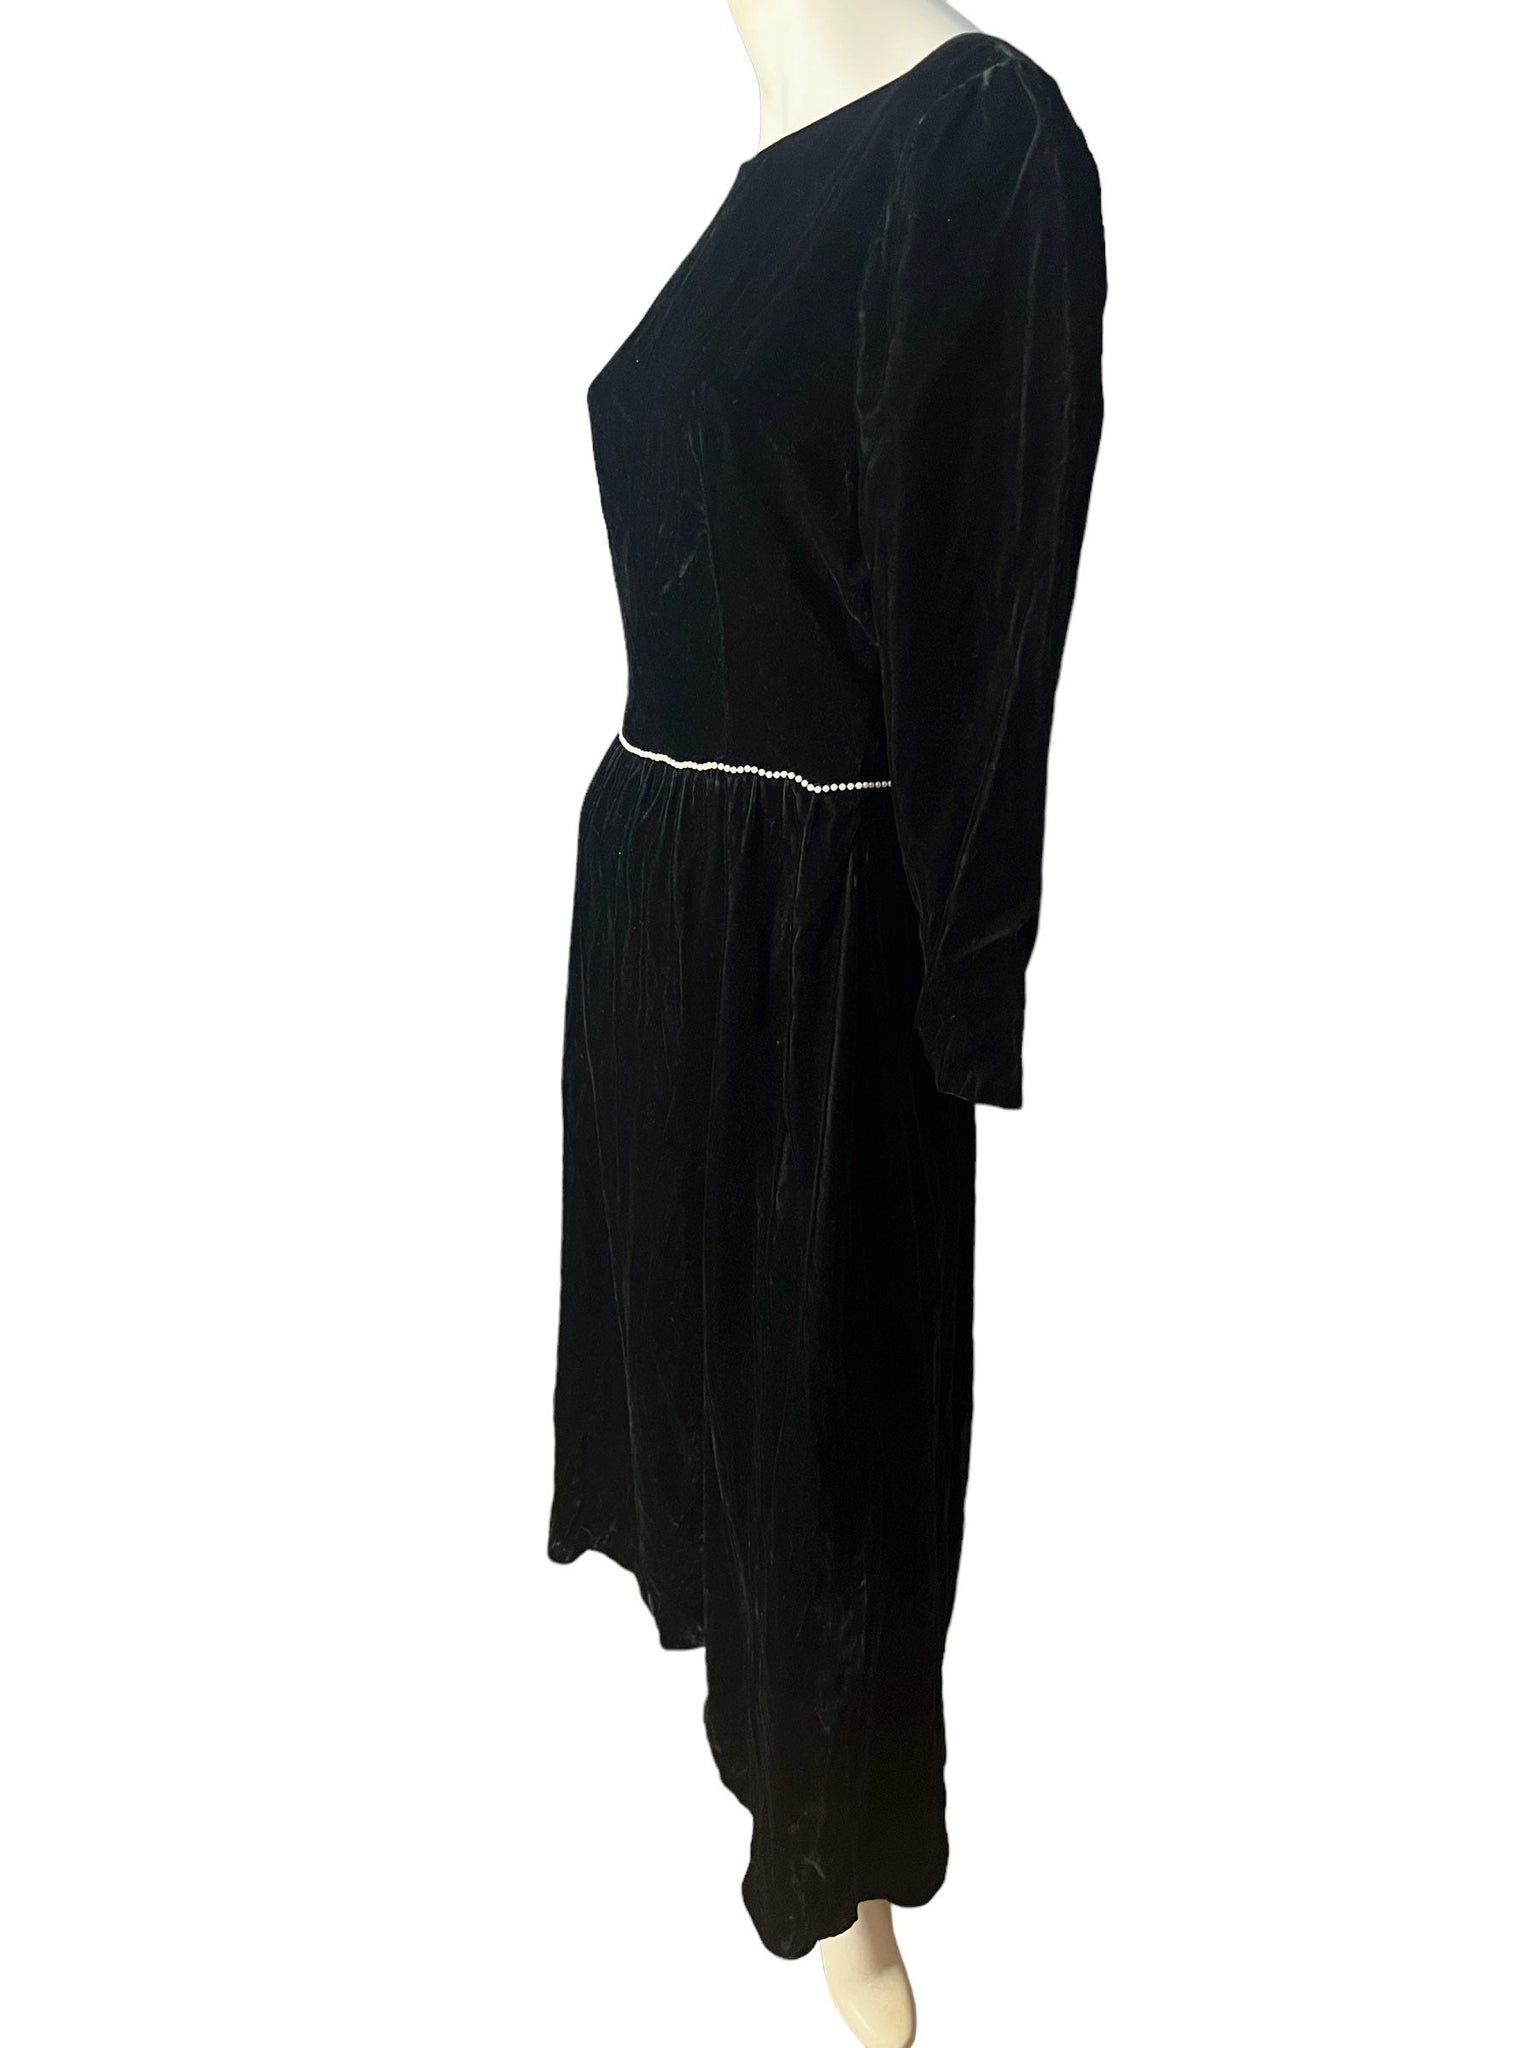 Vintage Lanz black velvet dress S party